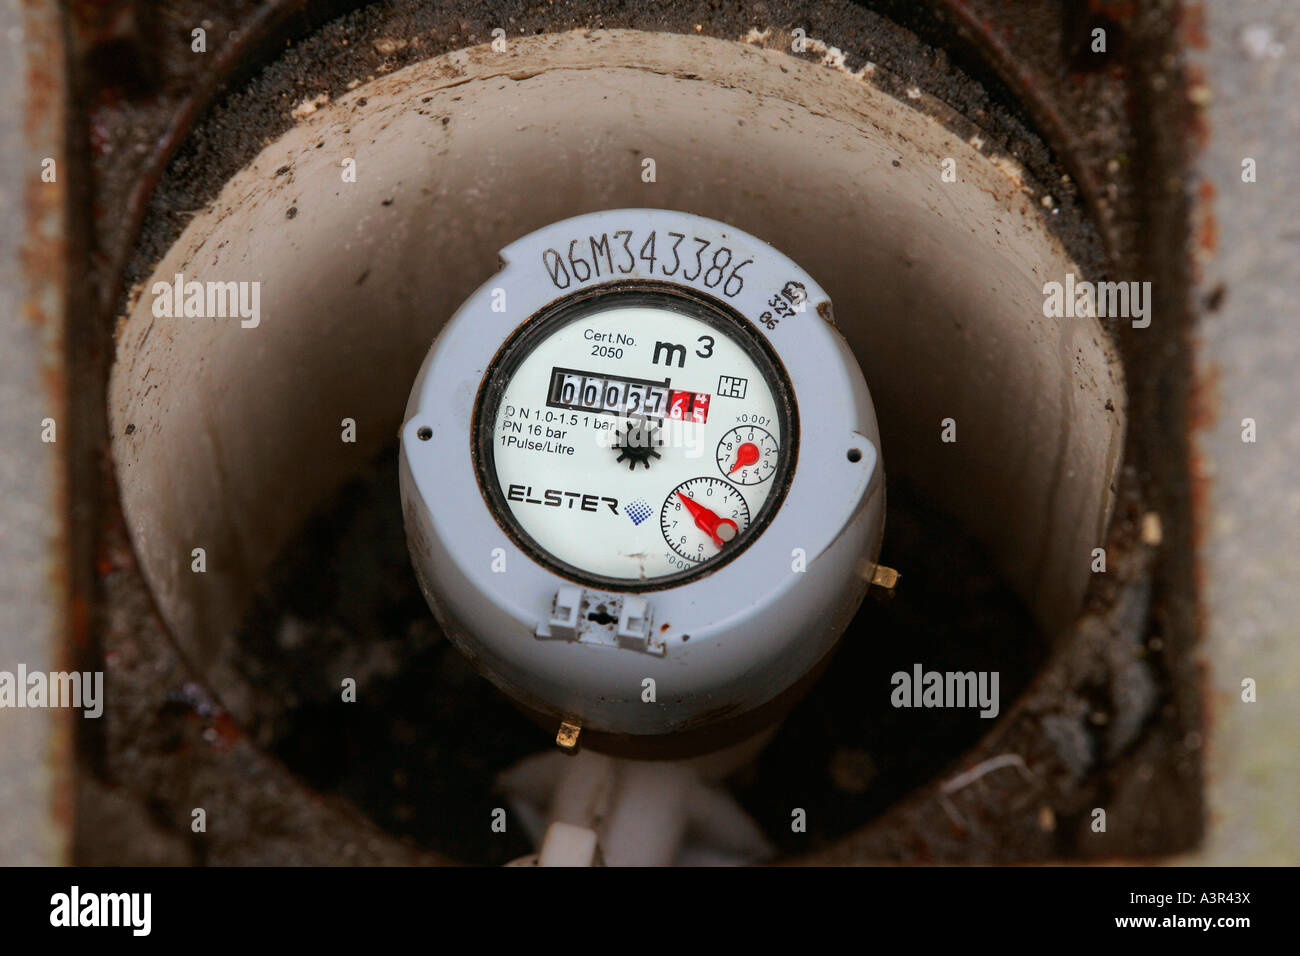 Domestic UK water meter. Stock Photo